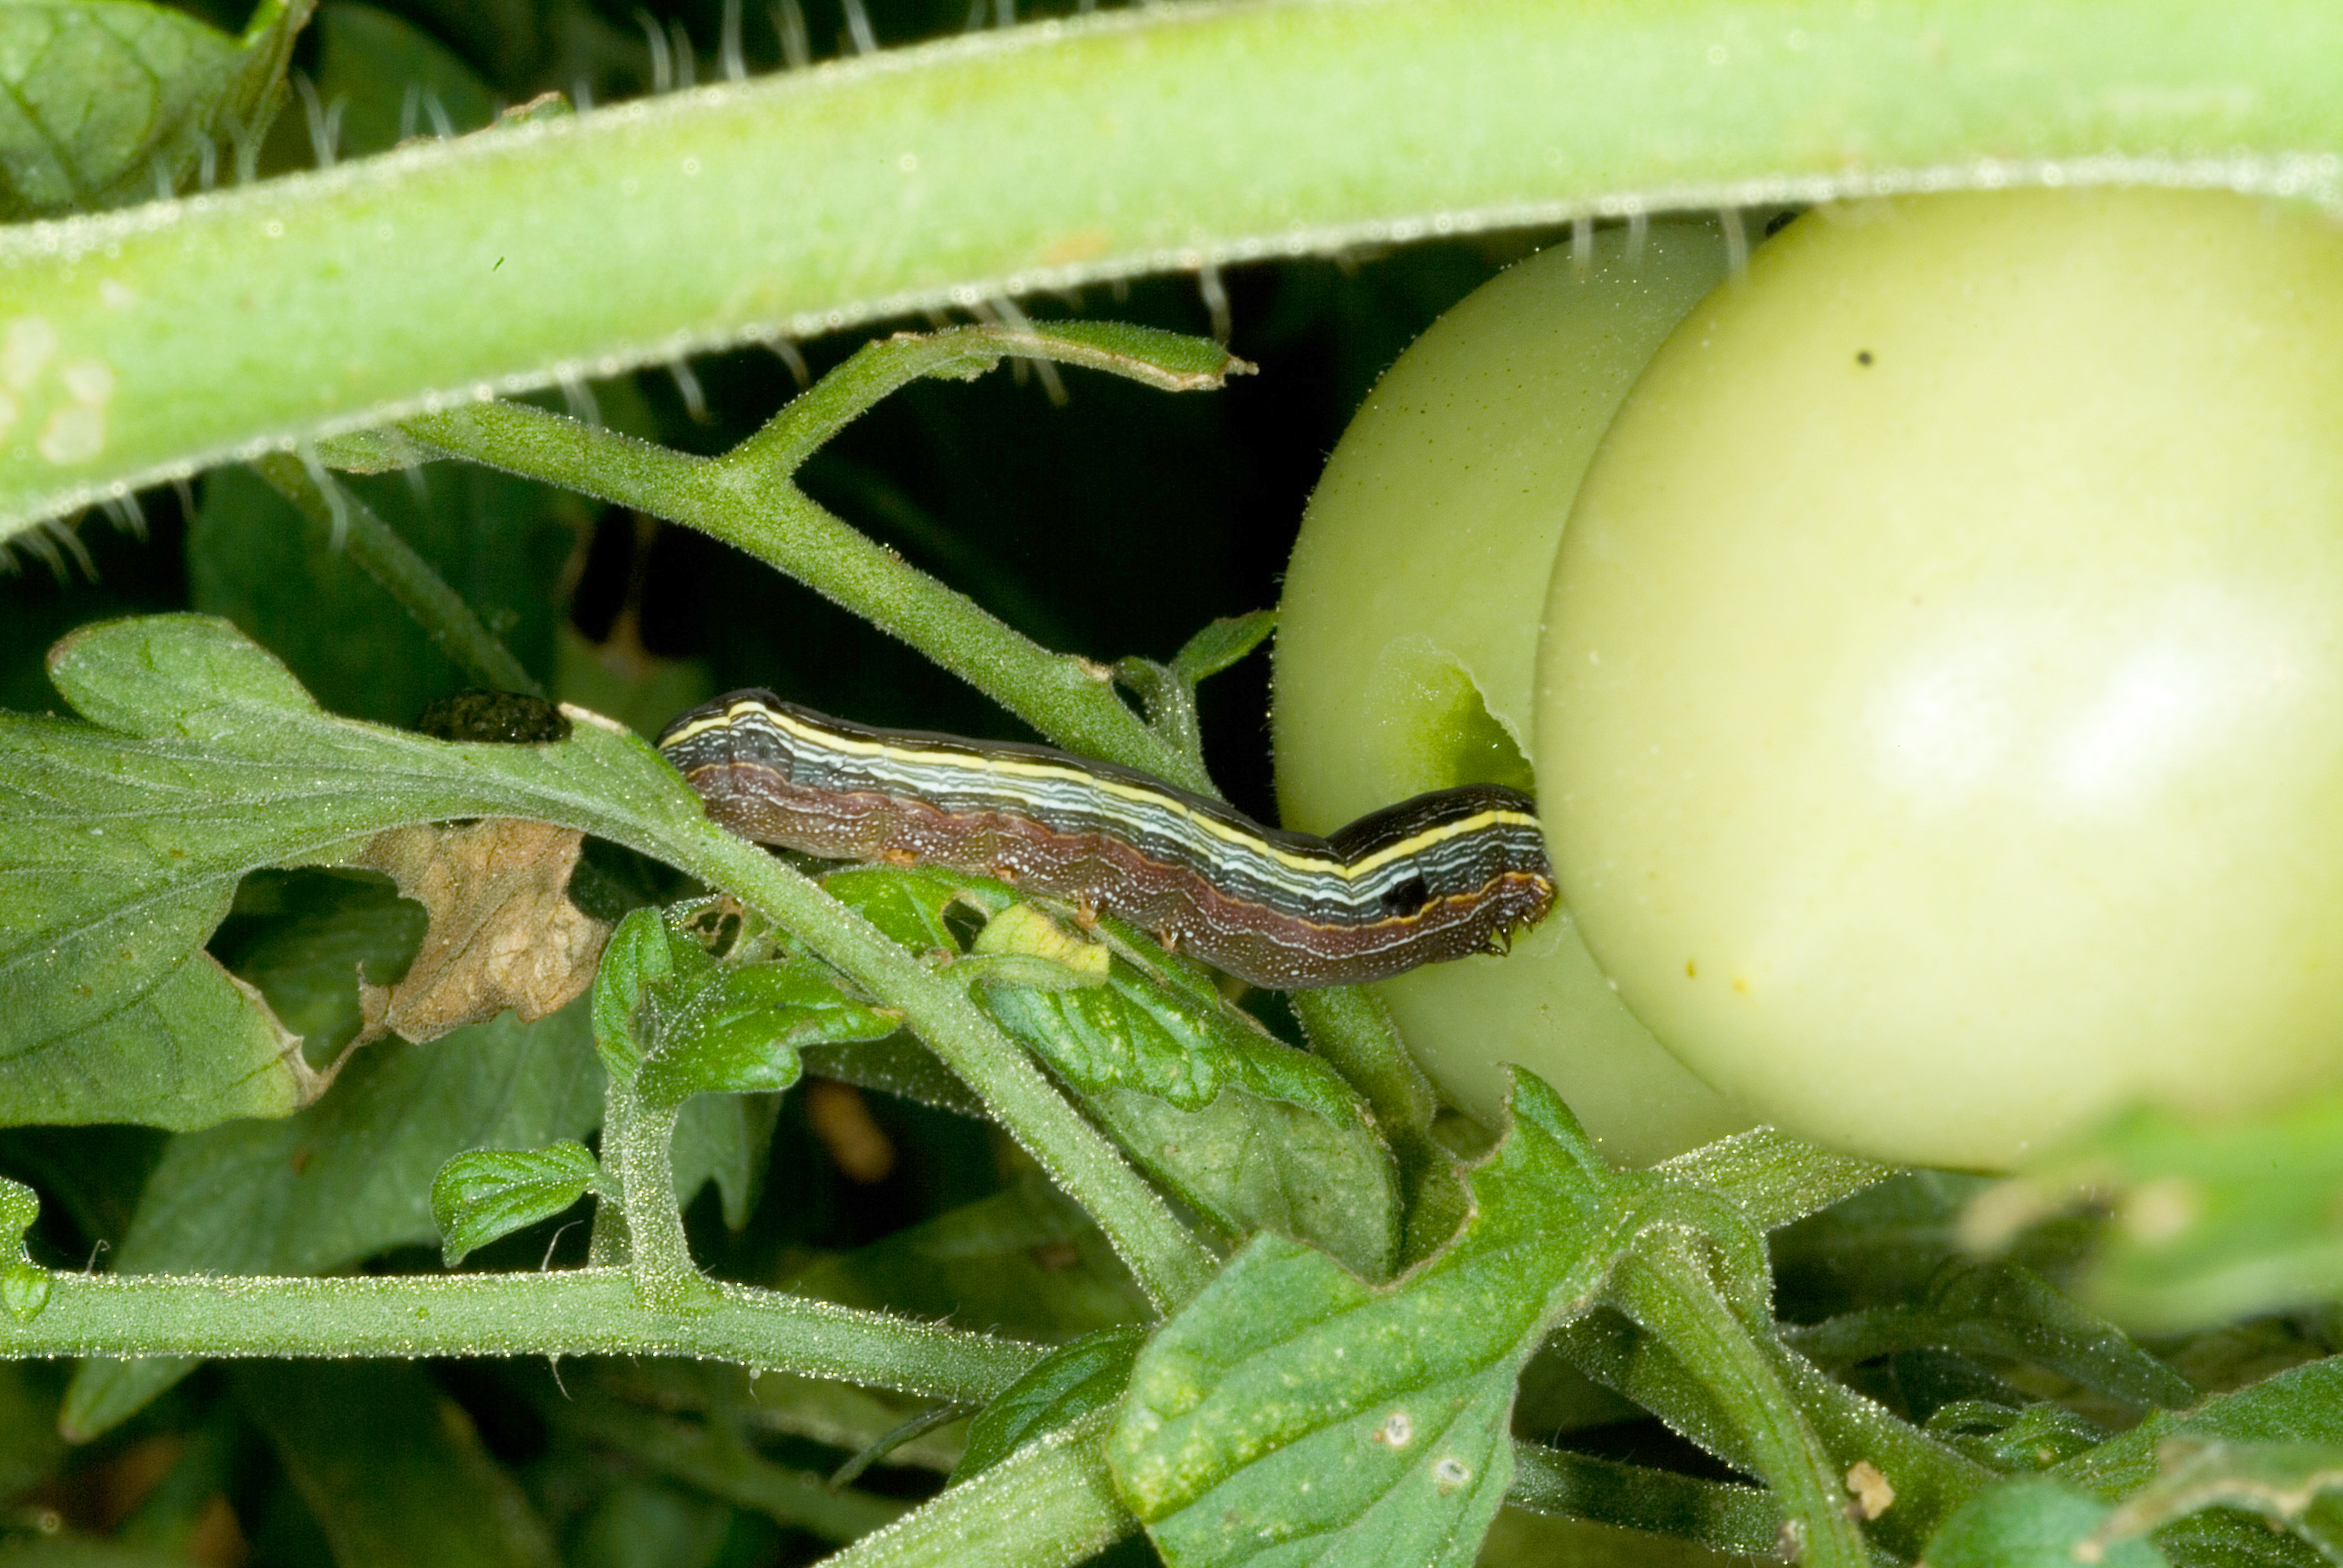 Yellow striped armyworm damaging tomato fruit.